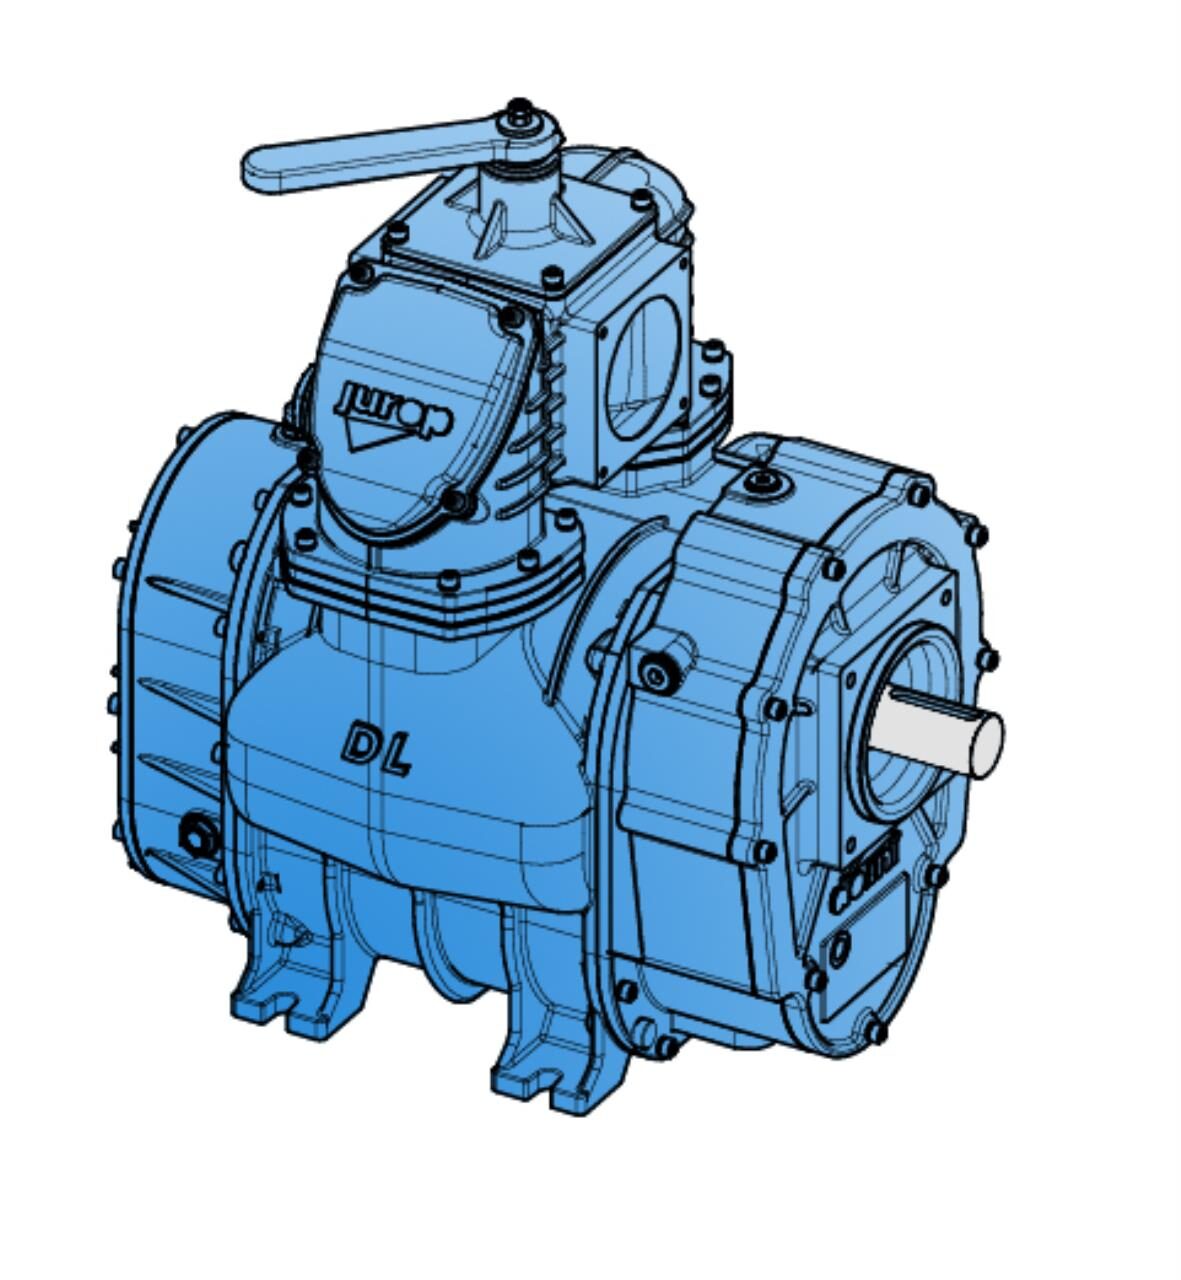 Jurop Vakuumkompressor DL 250/JULIA